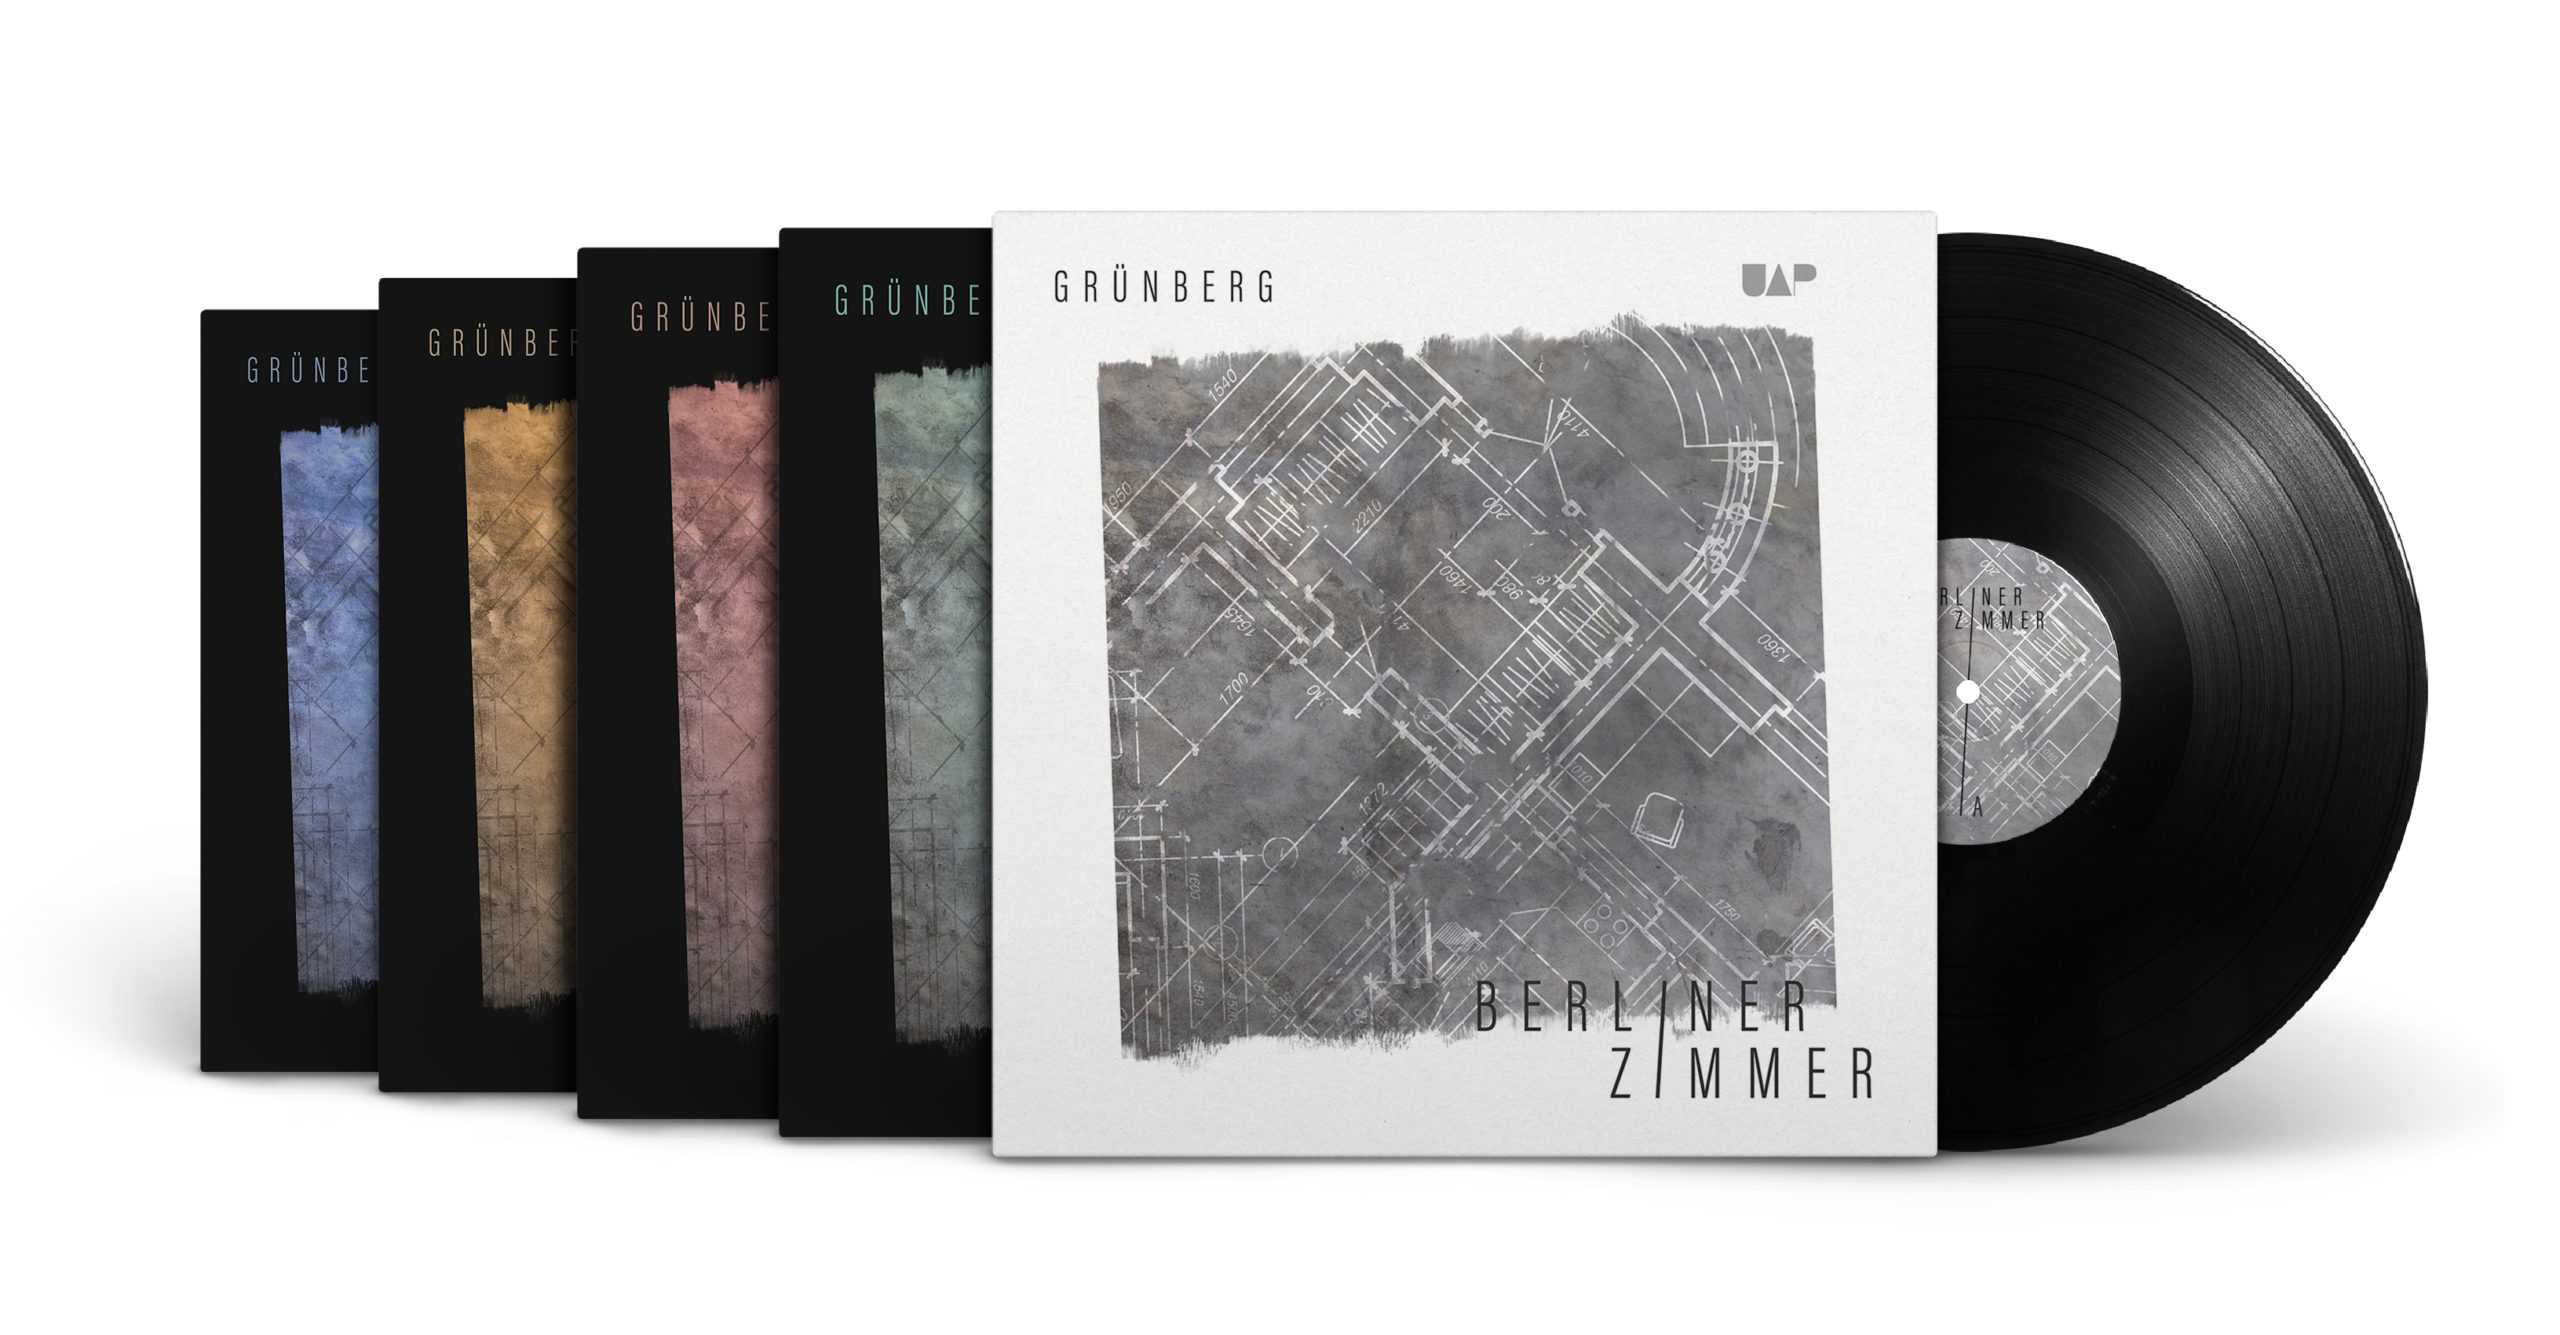 Cover artwork for Gruenberg's Berliner Zimmer EP release by Yvonne Hartmann